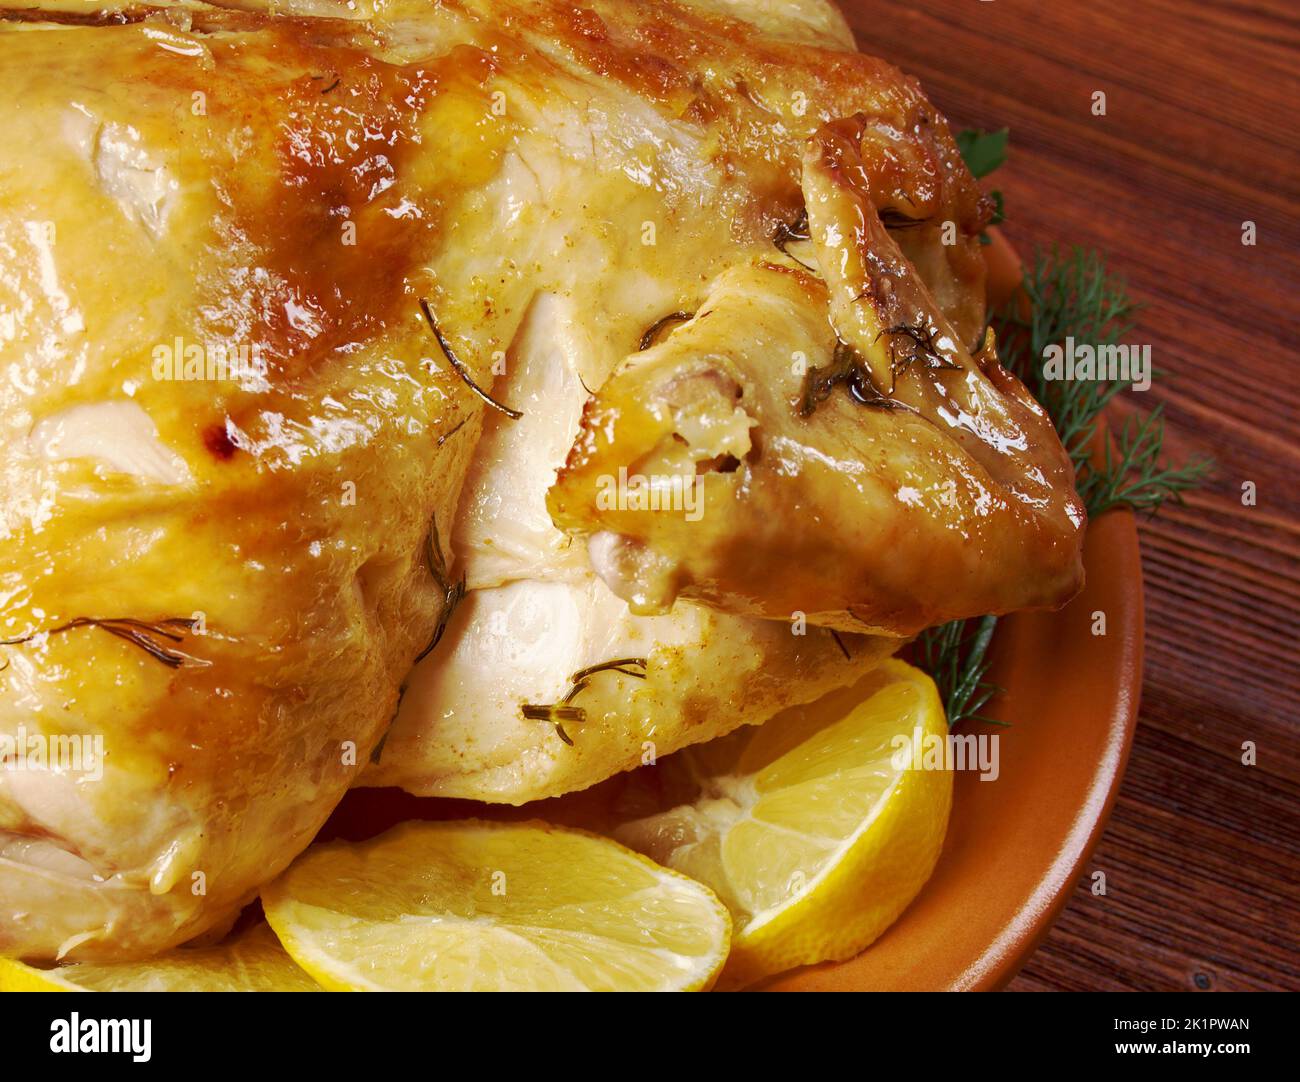 Roasted Split Turkey Breast With Cajun Spices Stock Photo